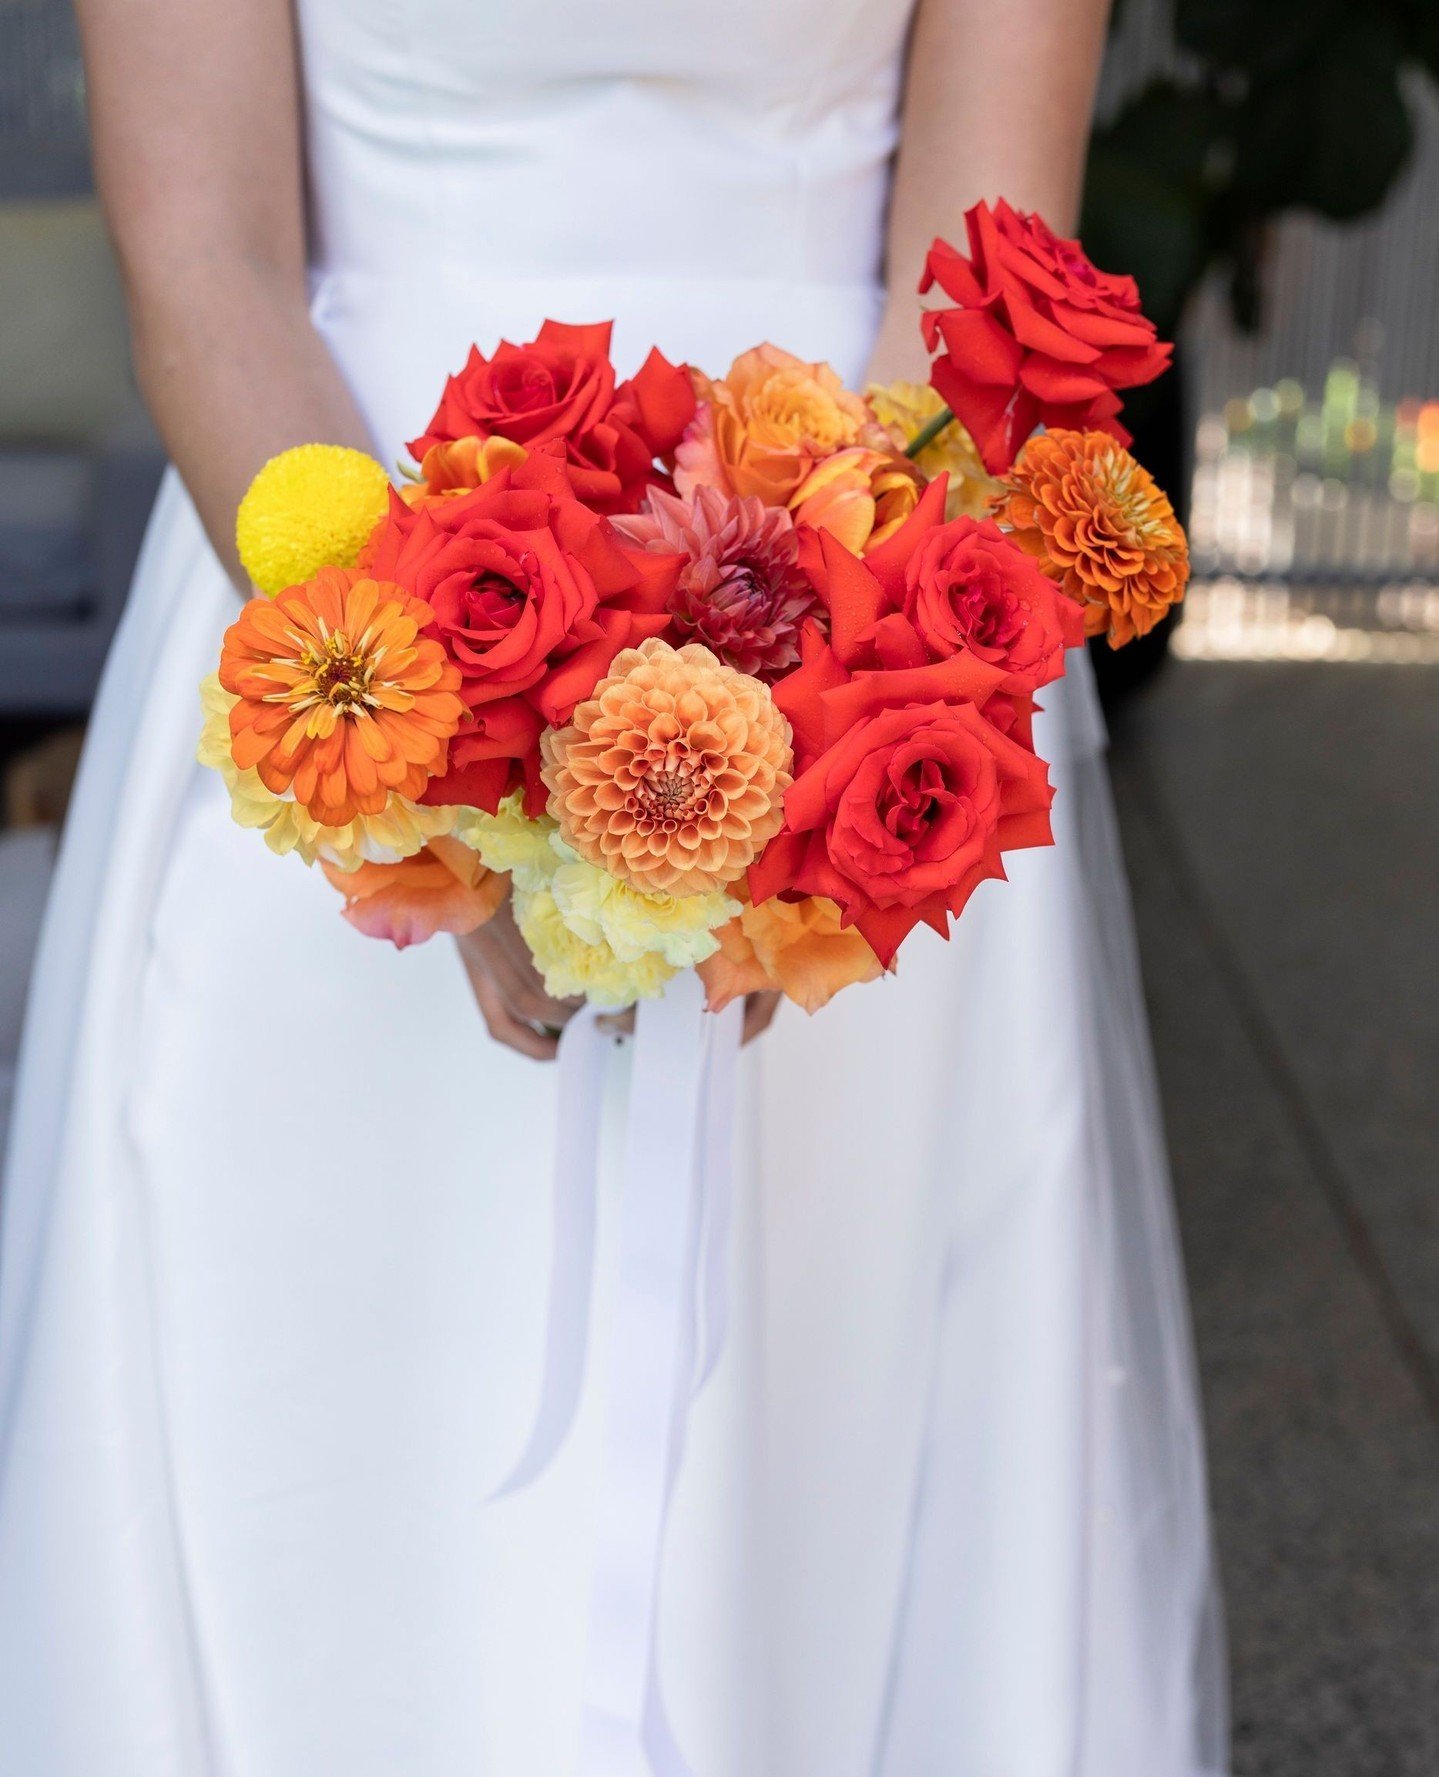 Punchy floral bouquet making a statement...⁠
⁠
Photographer: @tawnyphotographyandfilm⁠
Florist: @mondofloraldesigns ⁠
⁠
⁠
⁠
⁠
⁠
⁠
⁠
⁠
#originalwedding #beautifulwedding #elegantwedding #weddinginspiration #weddingideas #weddingdecor #weddingdetails #